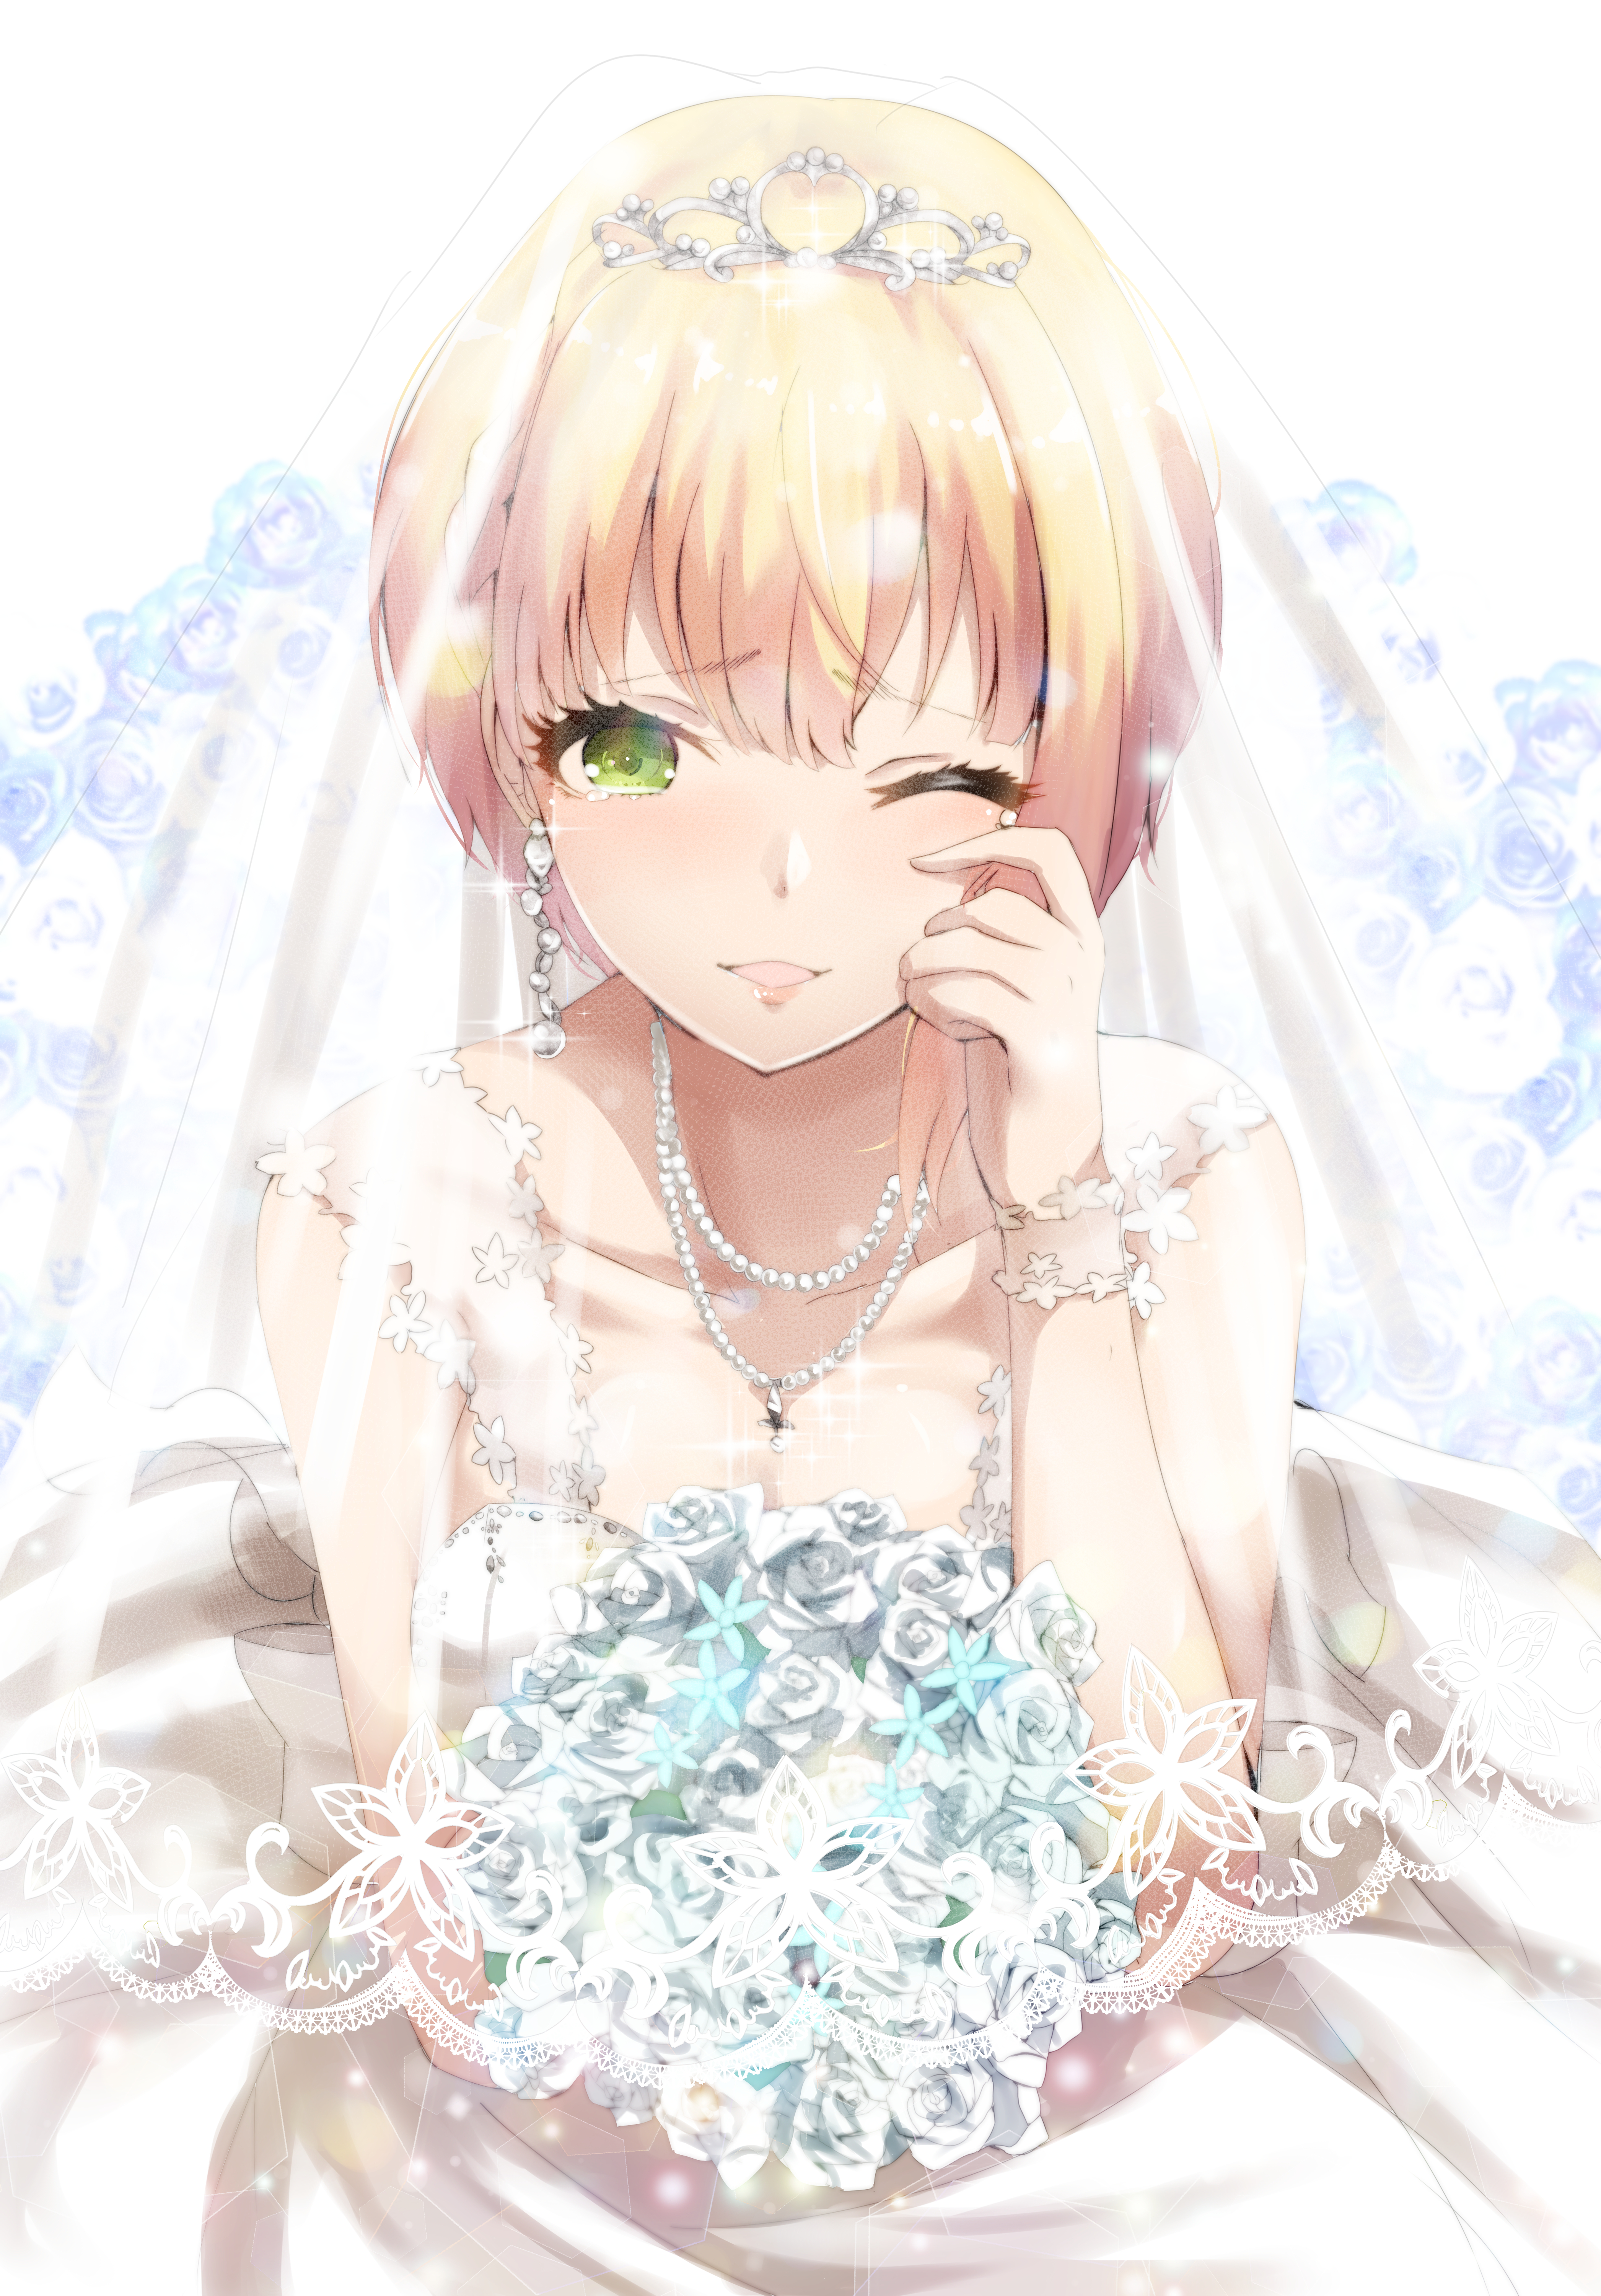 Anime 4185x6000 anime anime girls digital art artwork portrait display 2D ryuu THE iDOLM@STER Miyamoto Frederica wedding dress bridal veil blonde green eyes tears